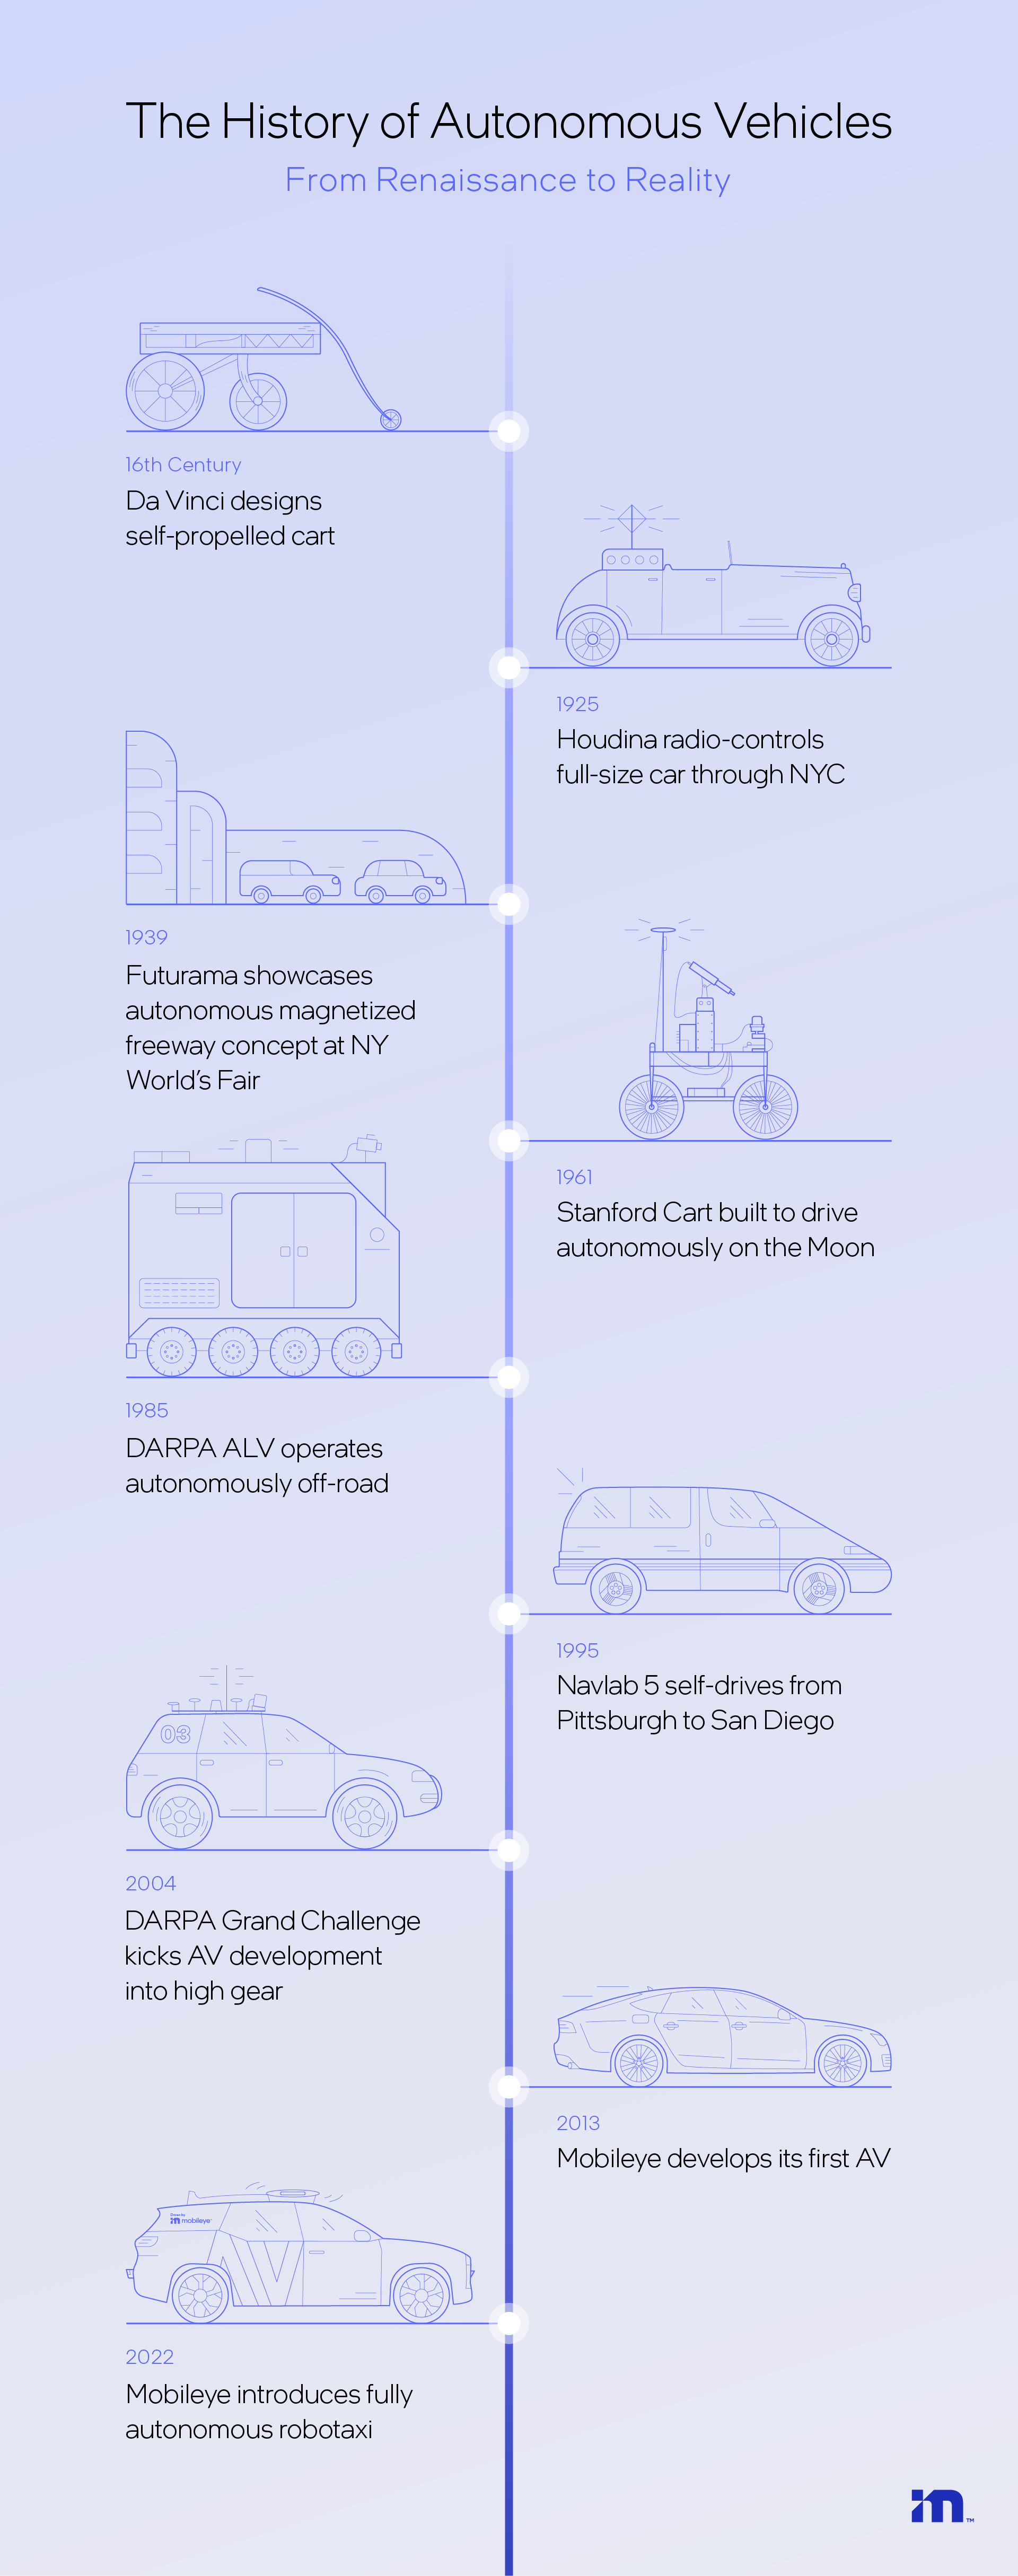 The timeline of autonomous-vehicle development, from Da Vinci to today